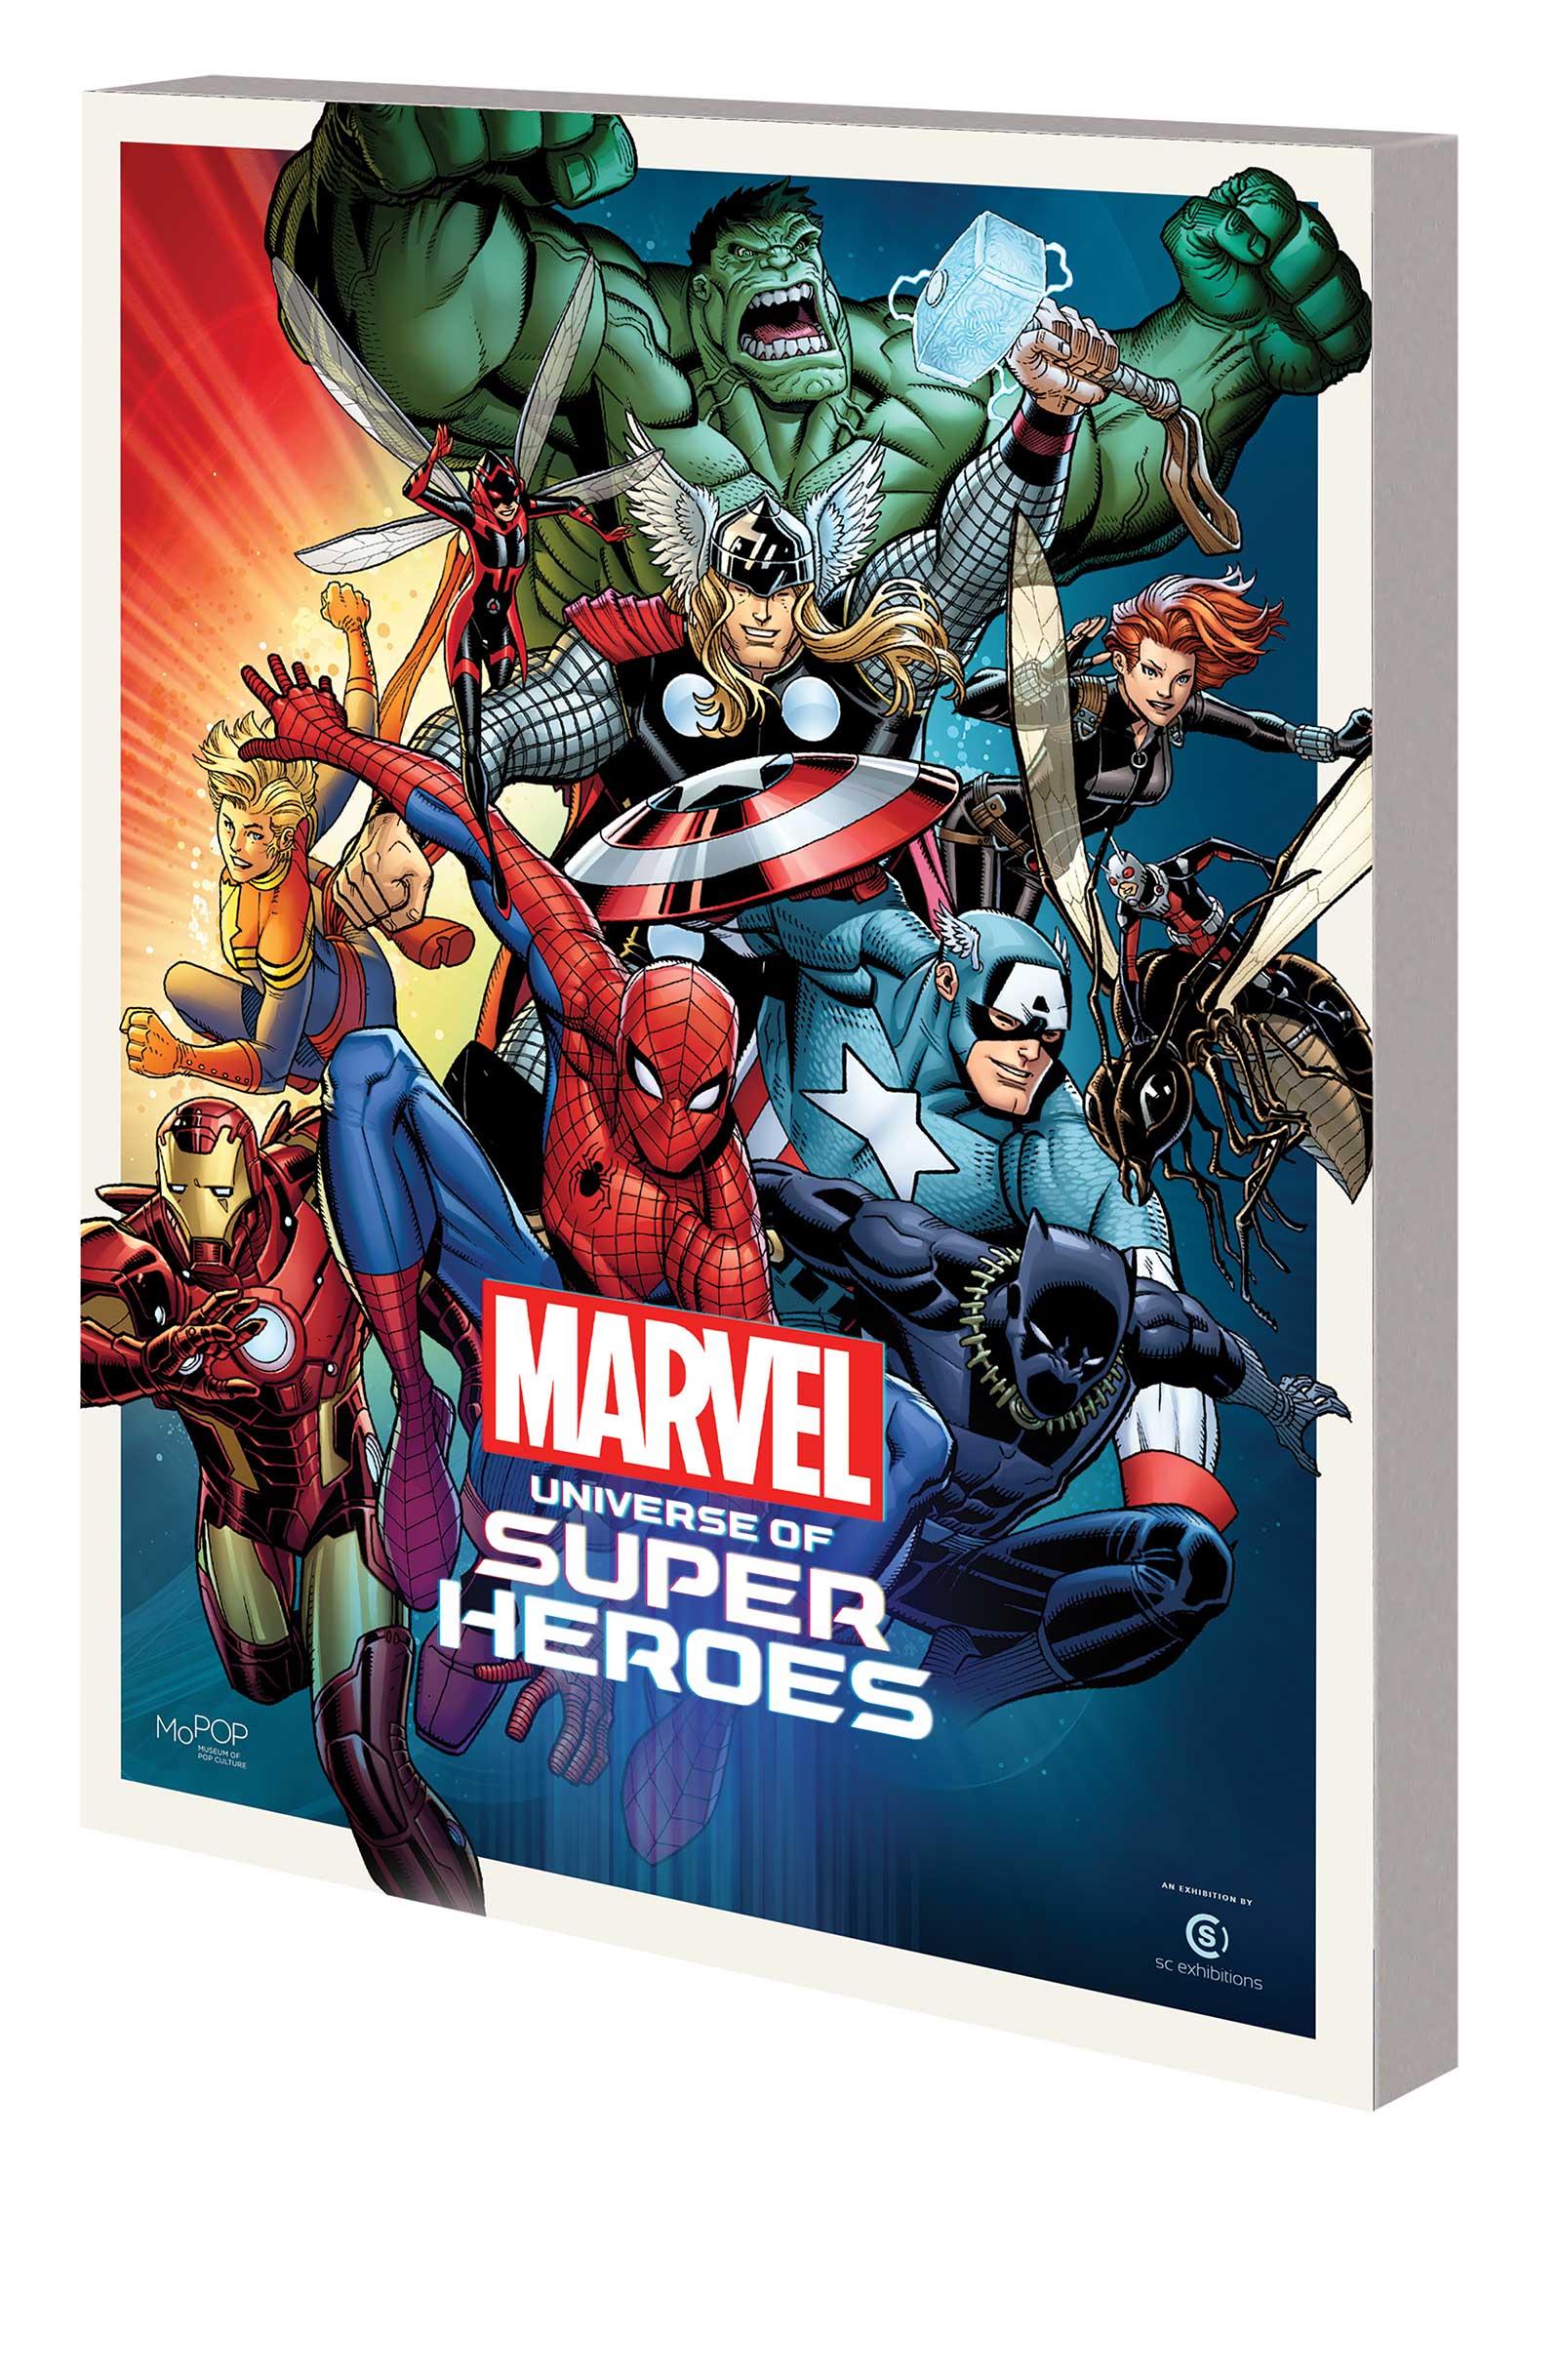 Marvel: Universe of Super Heroes Museum Exhibit Guide